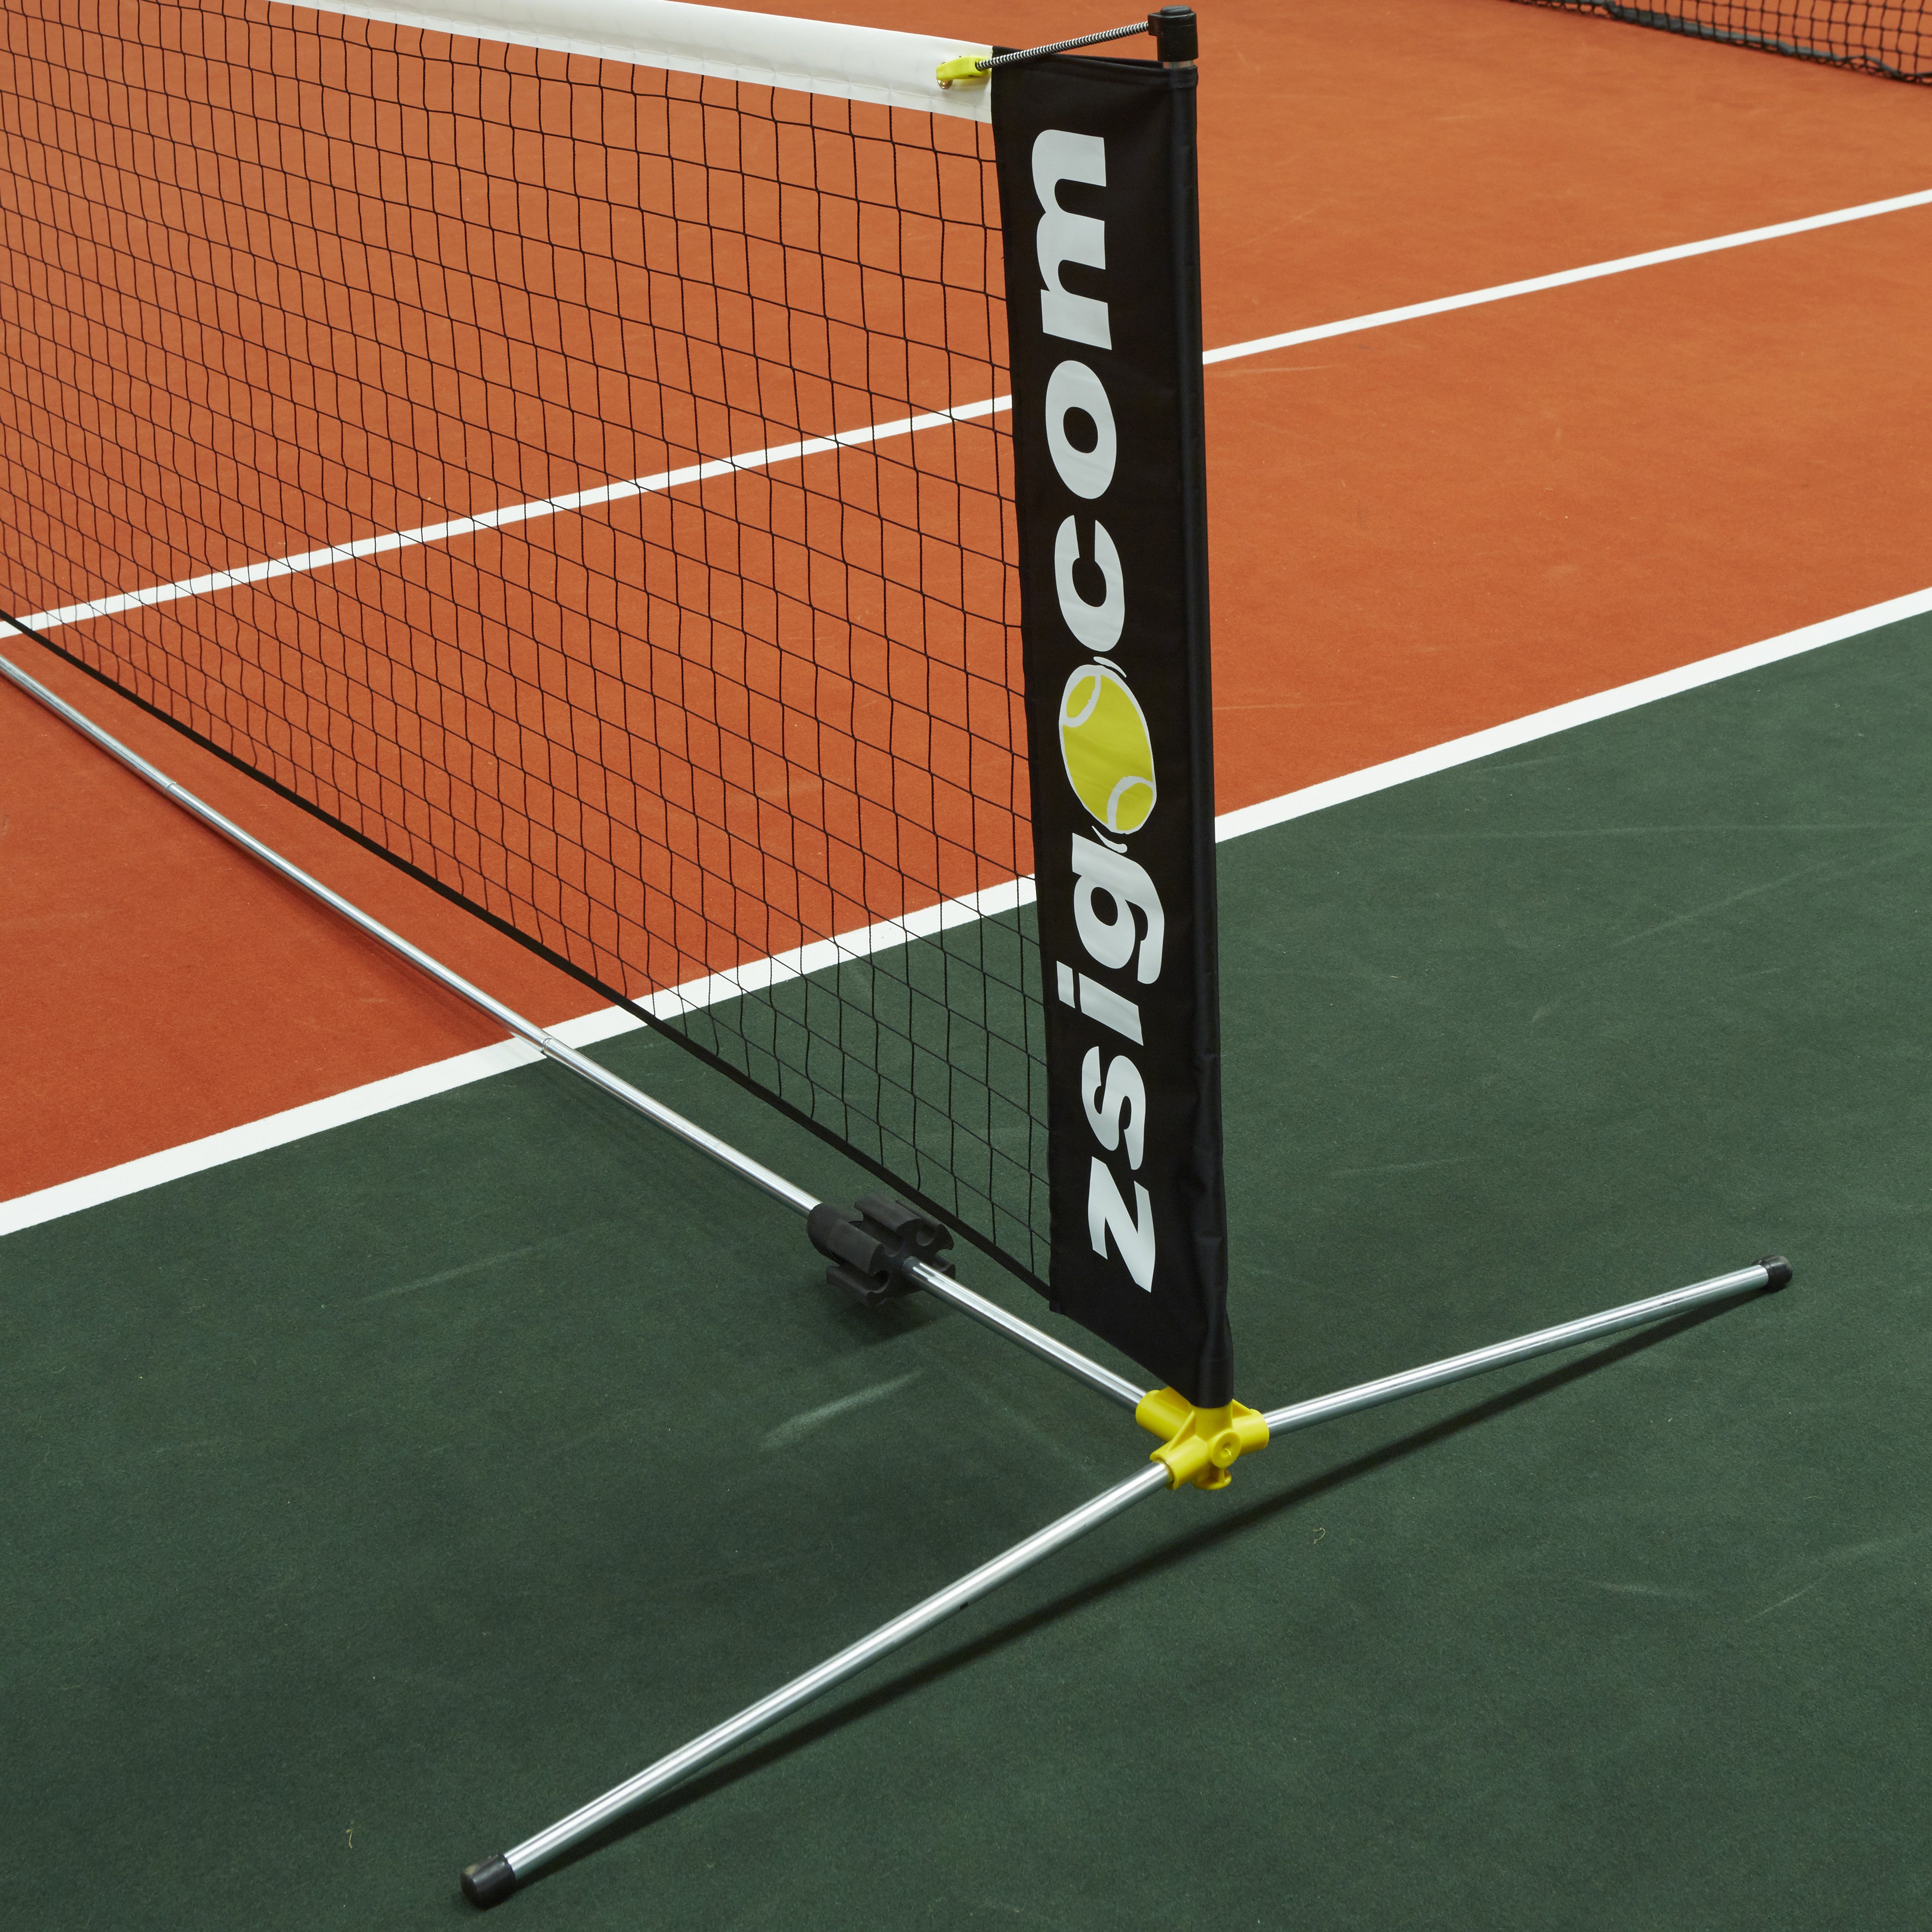 Zsignet 48 (12.8m) full-size portable tennis net tensioning.